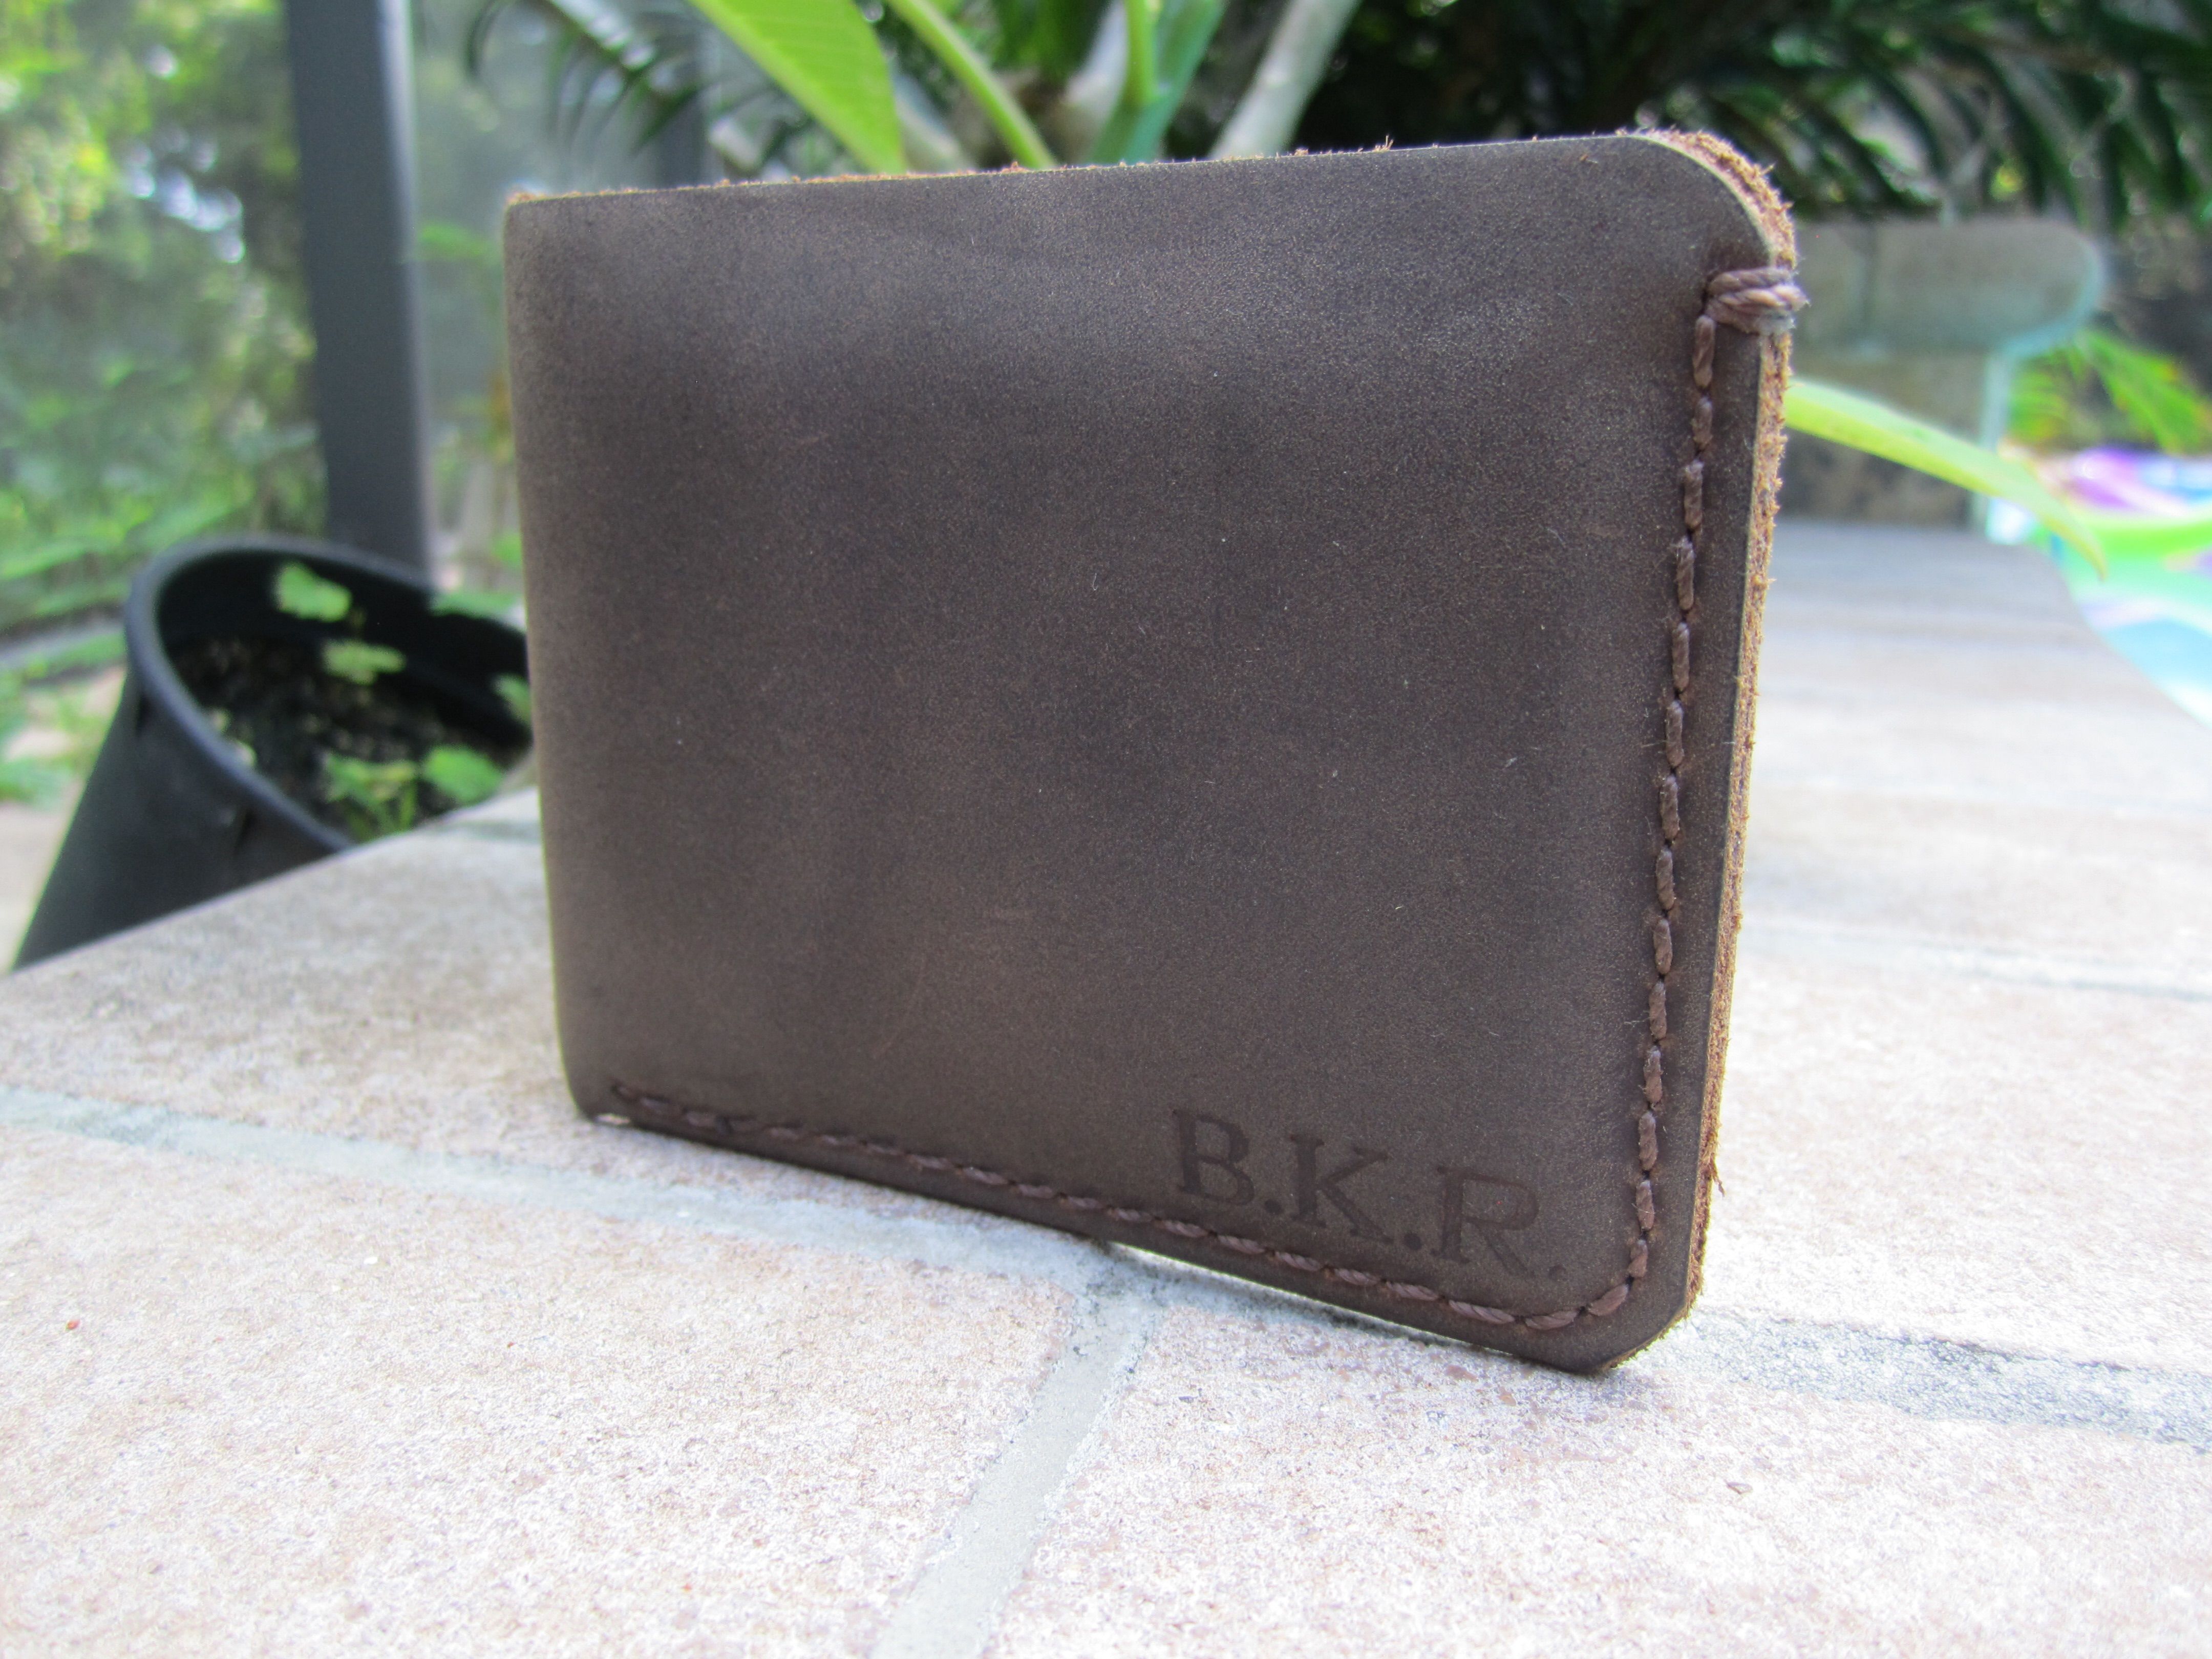 Leather Bifold Wallet Minimalist Leather Wallet Mens Slim 